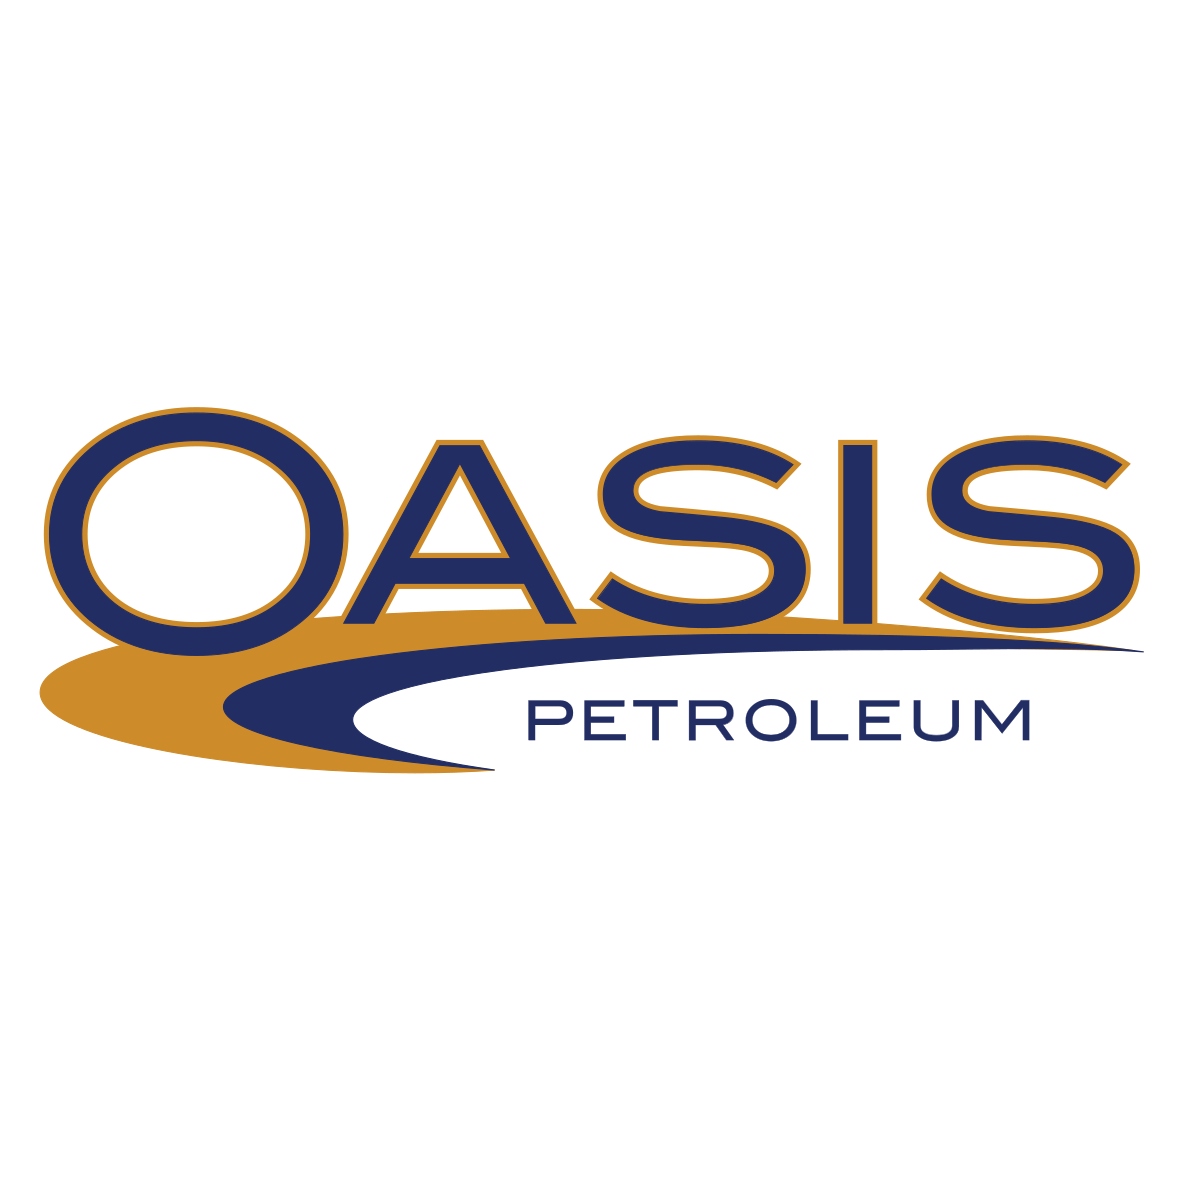 1200px-Oasis_petroleum_logo.svg